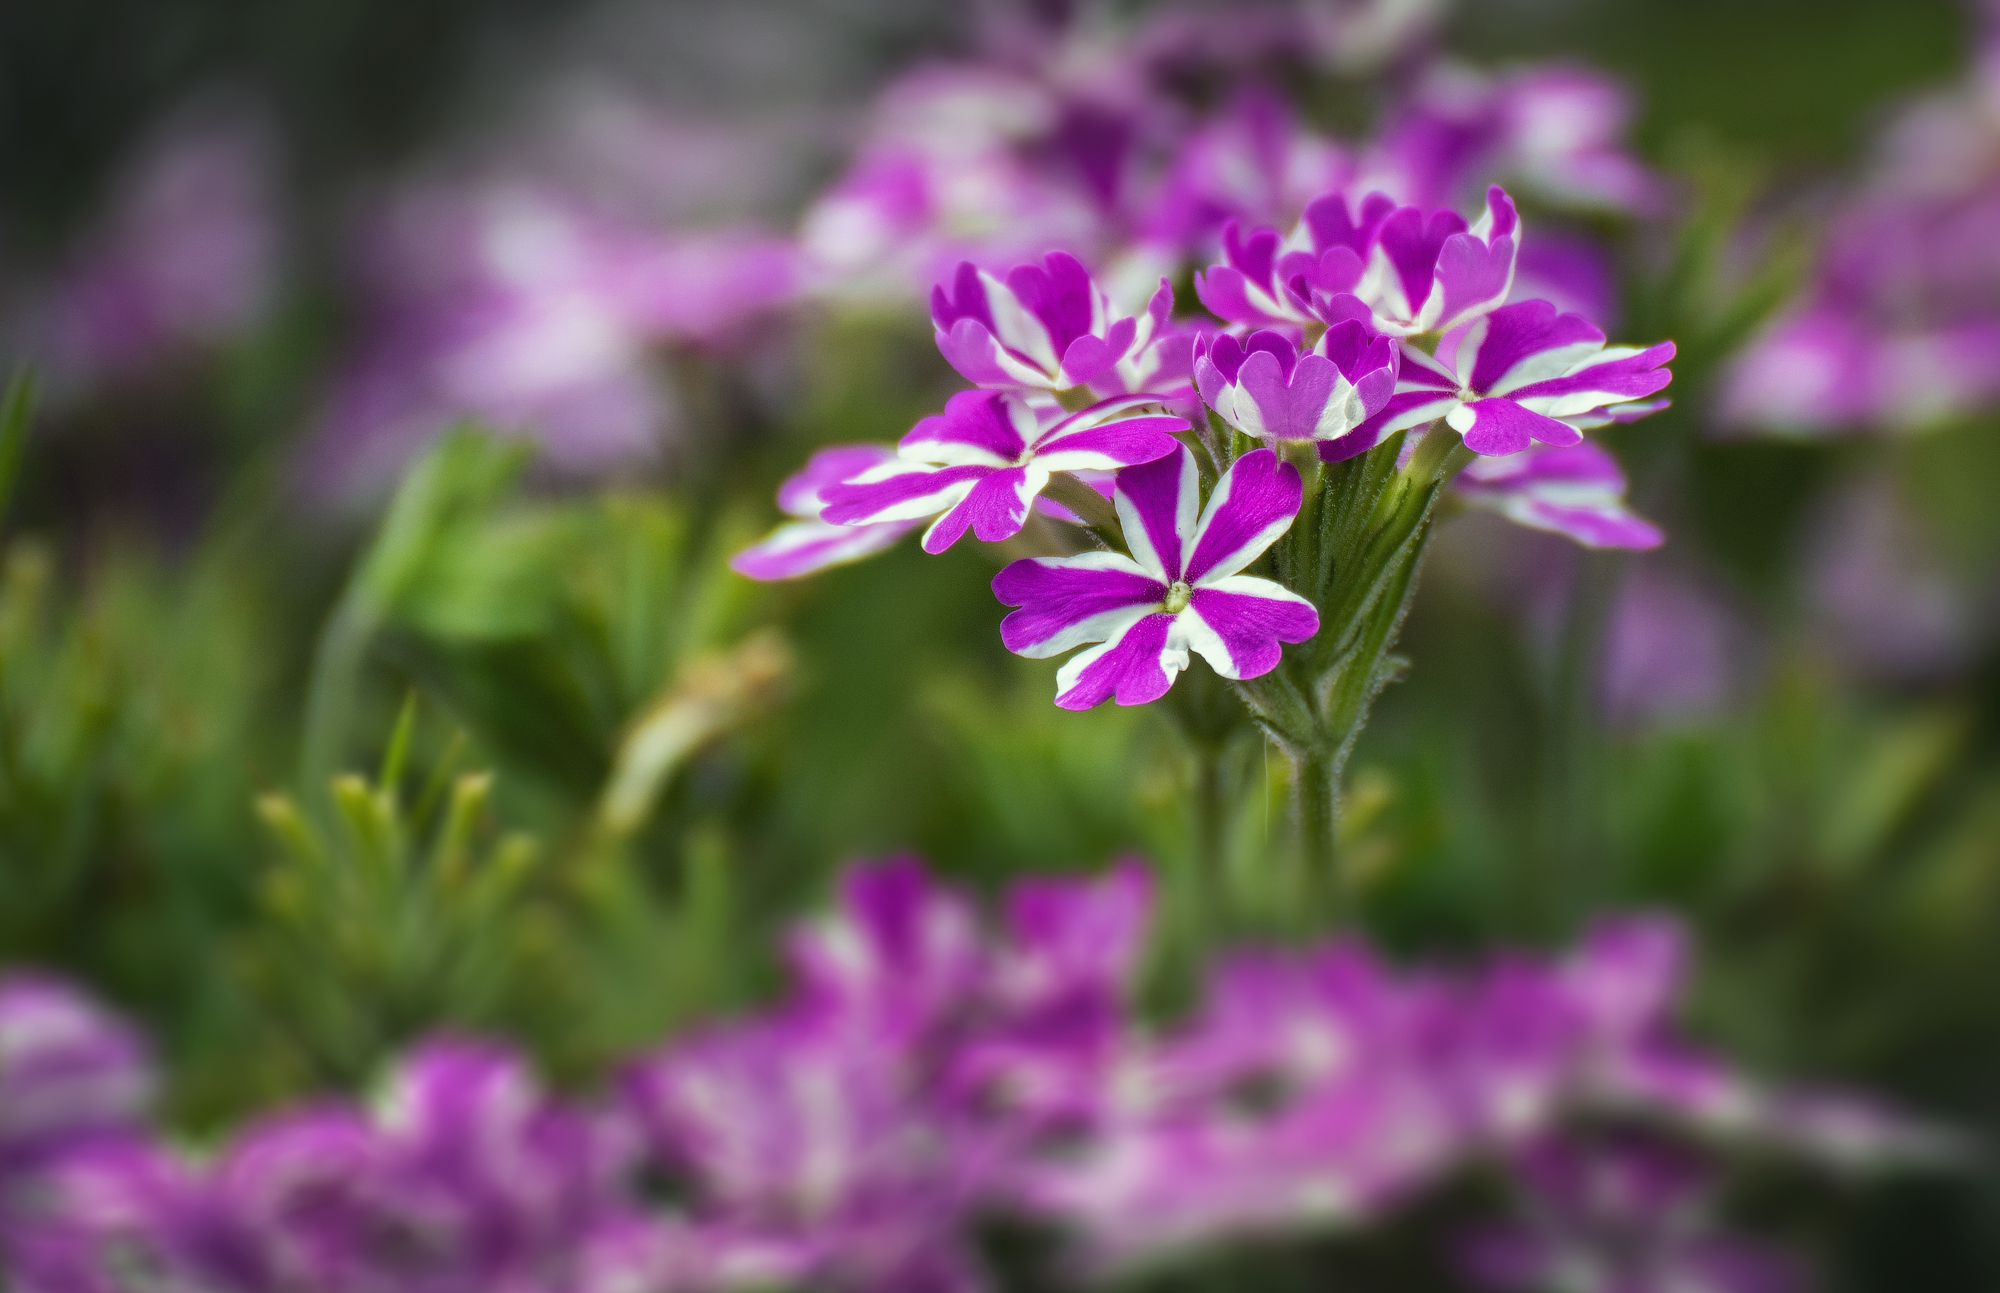 verbena-plant-flower-purple-petal-terrestrial-plant-1641900-pxhere.com